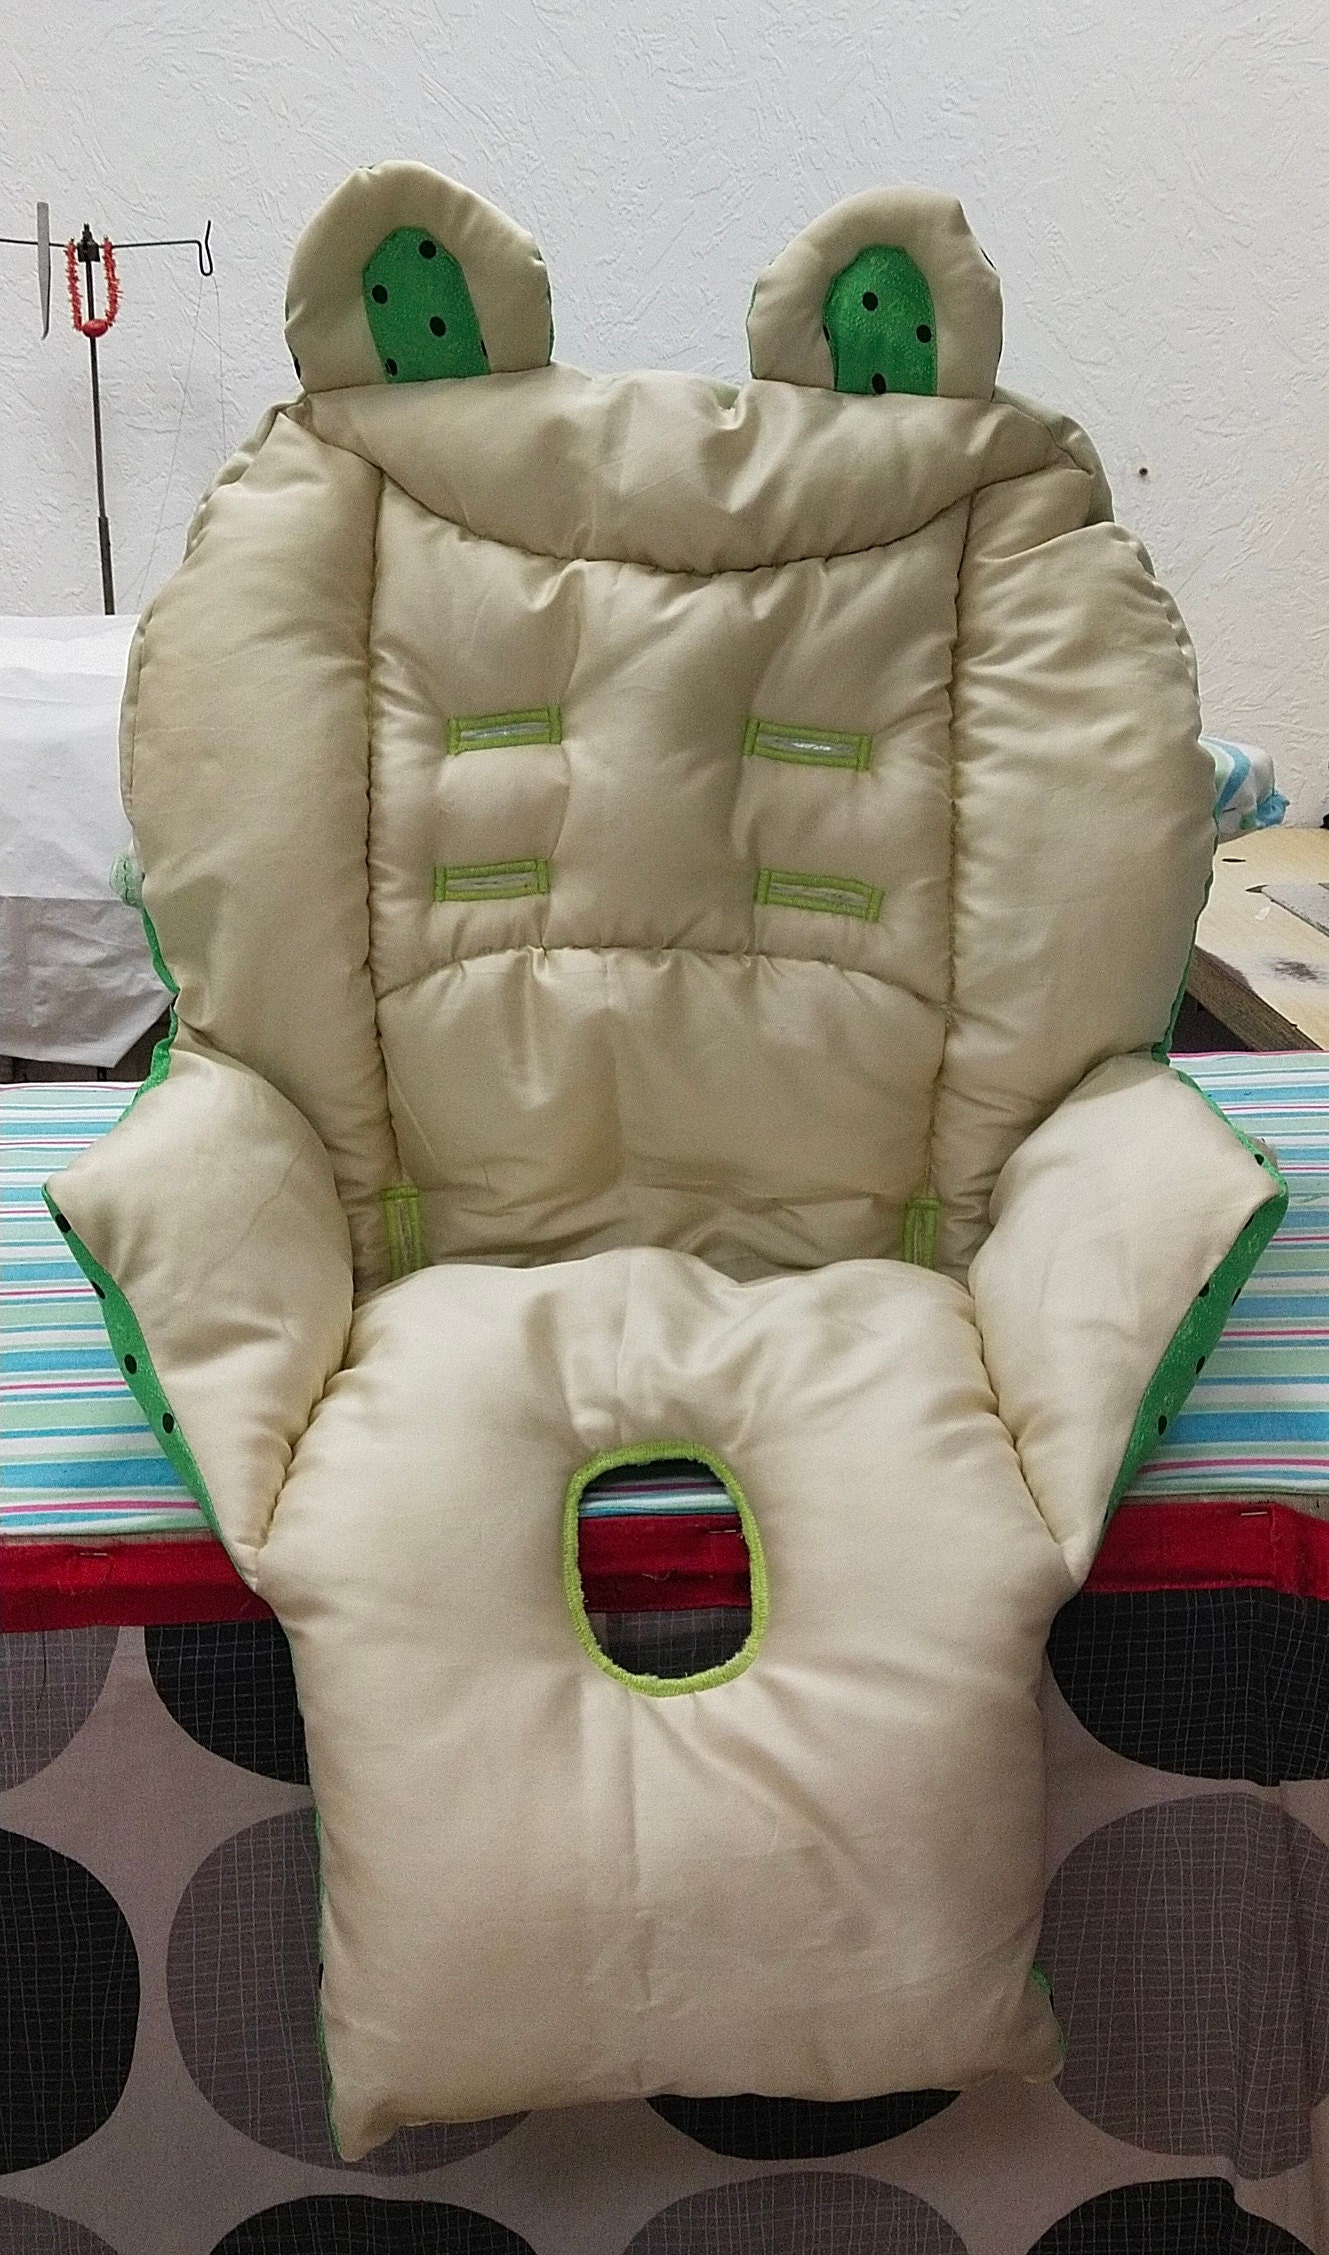 Funda para silla alta Bebe Confort Omega1 Funda personalizada